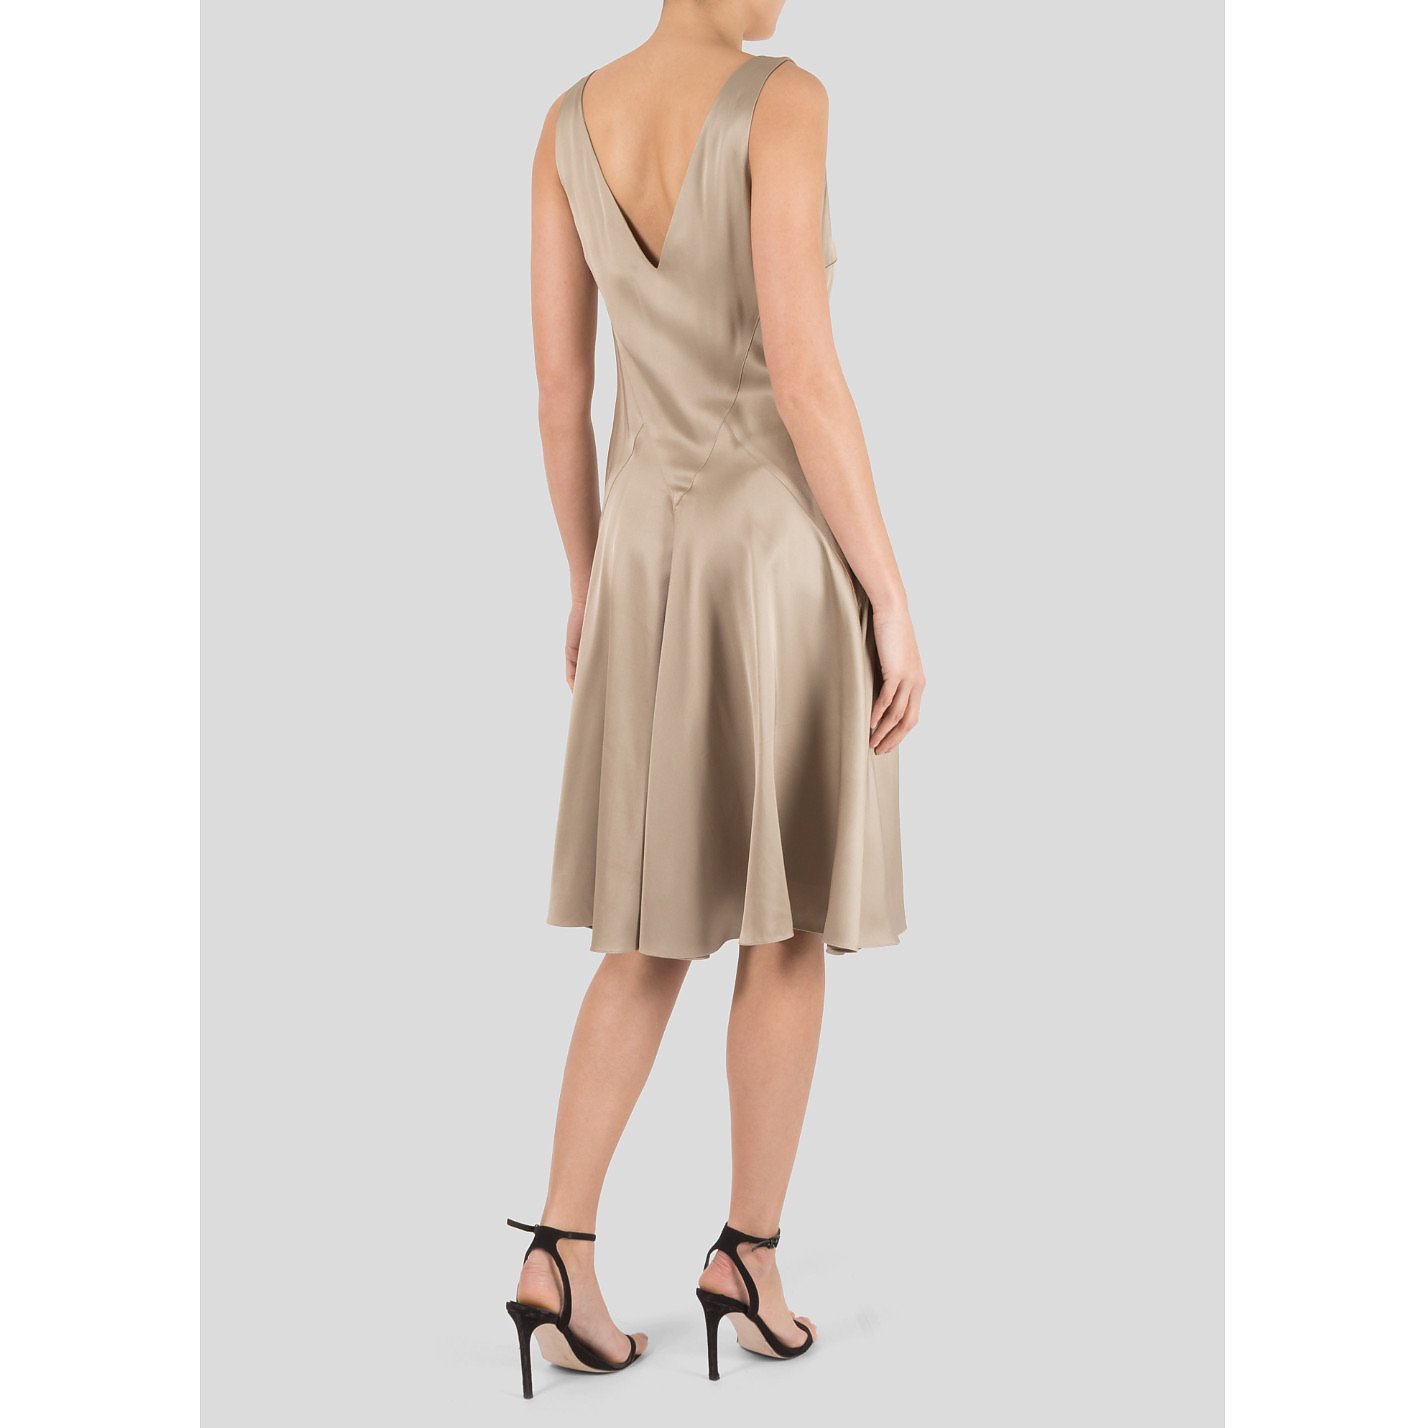 Rent or Buy Ralph Lauren Silk Cocktail Dress from